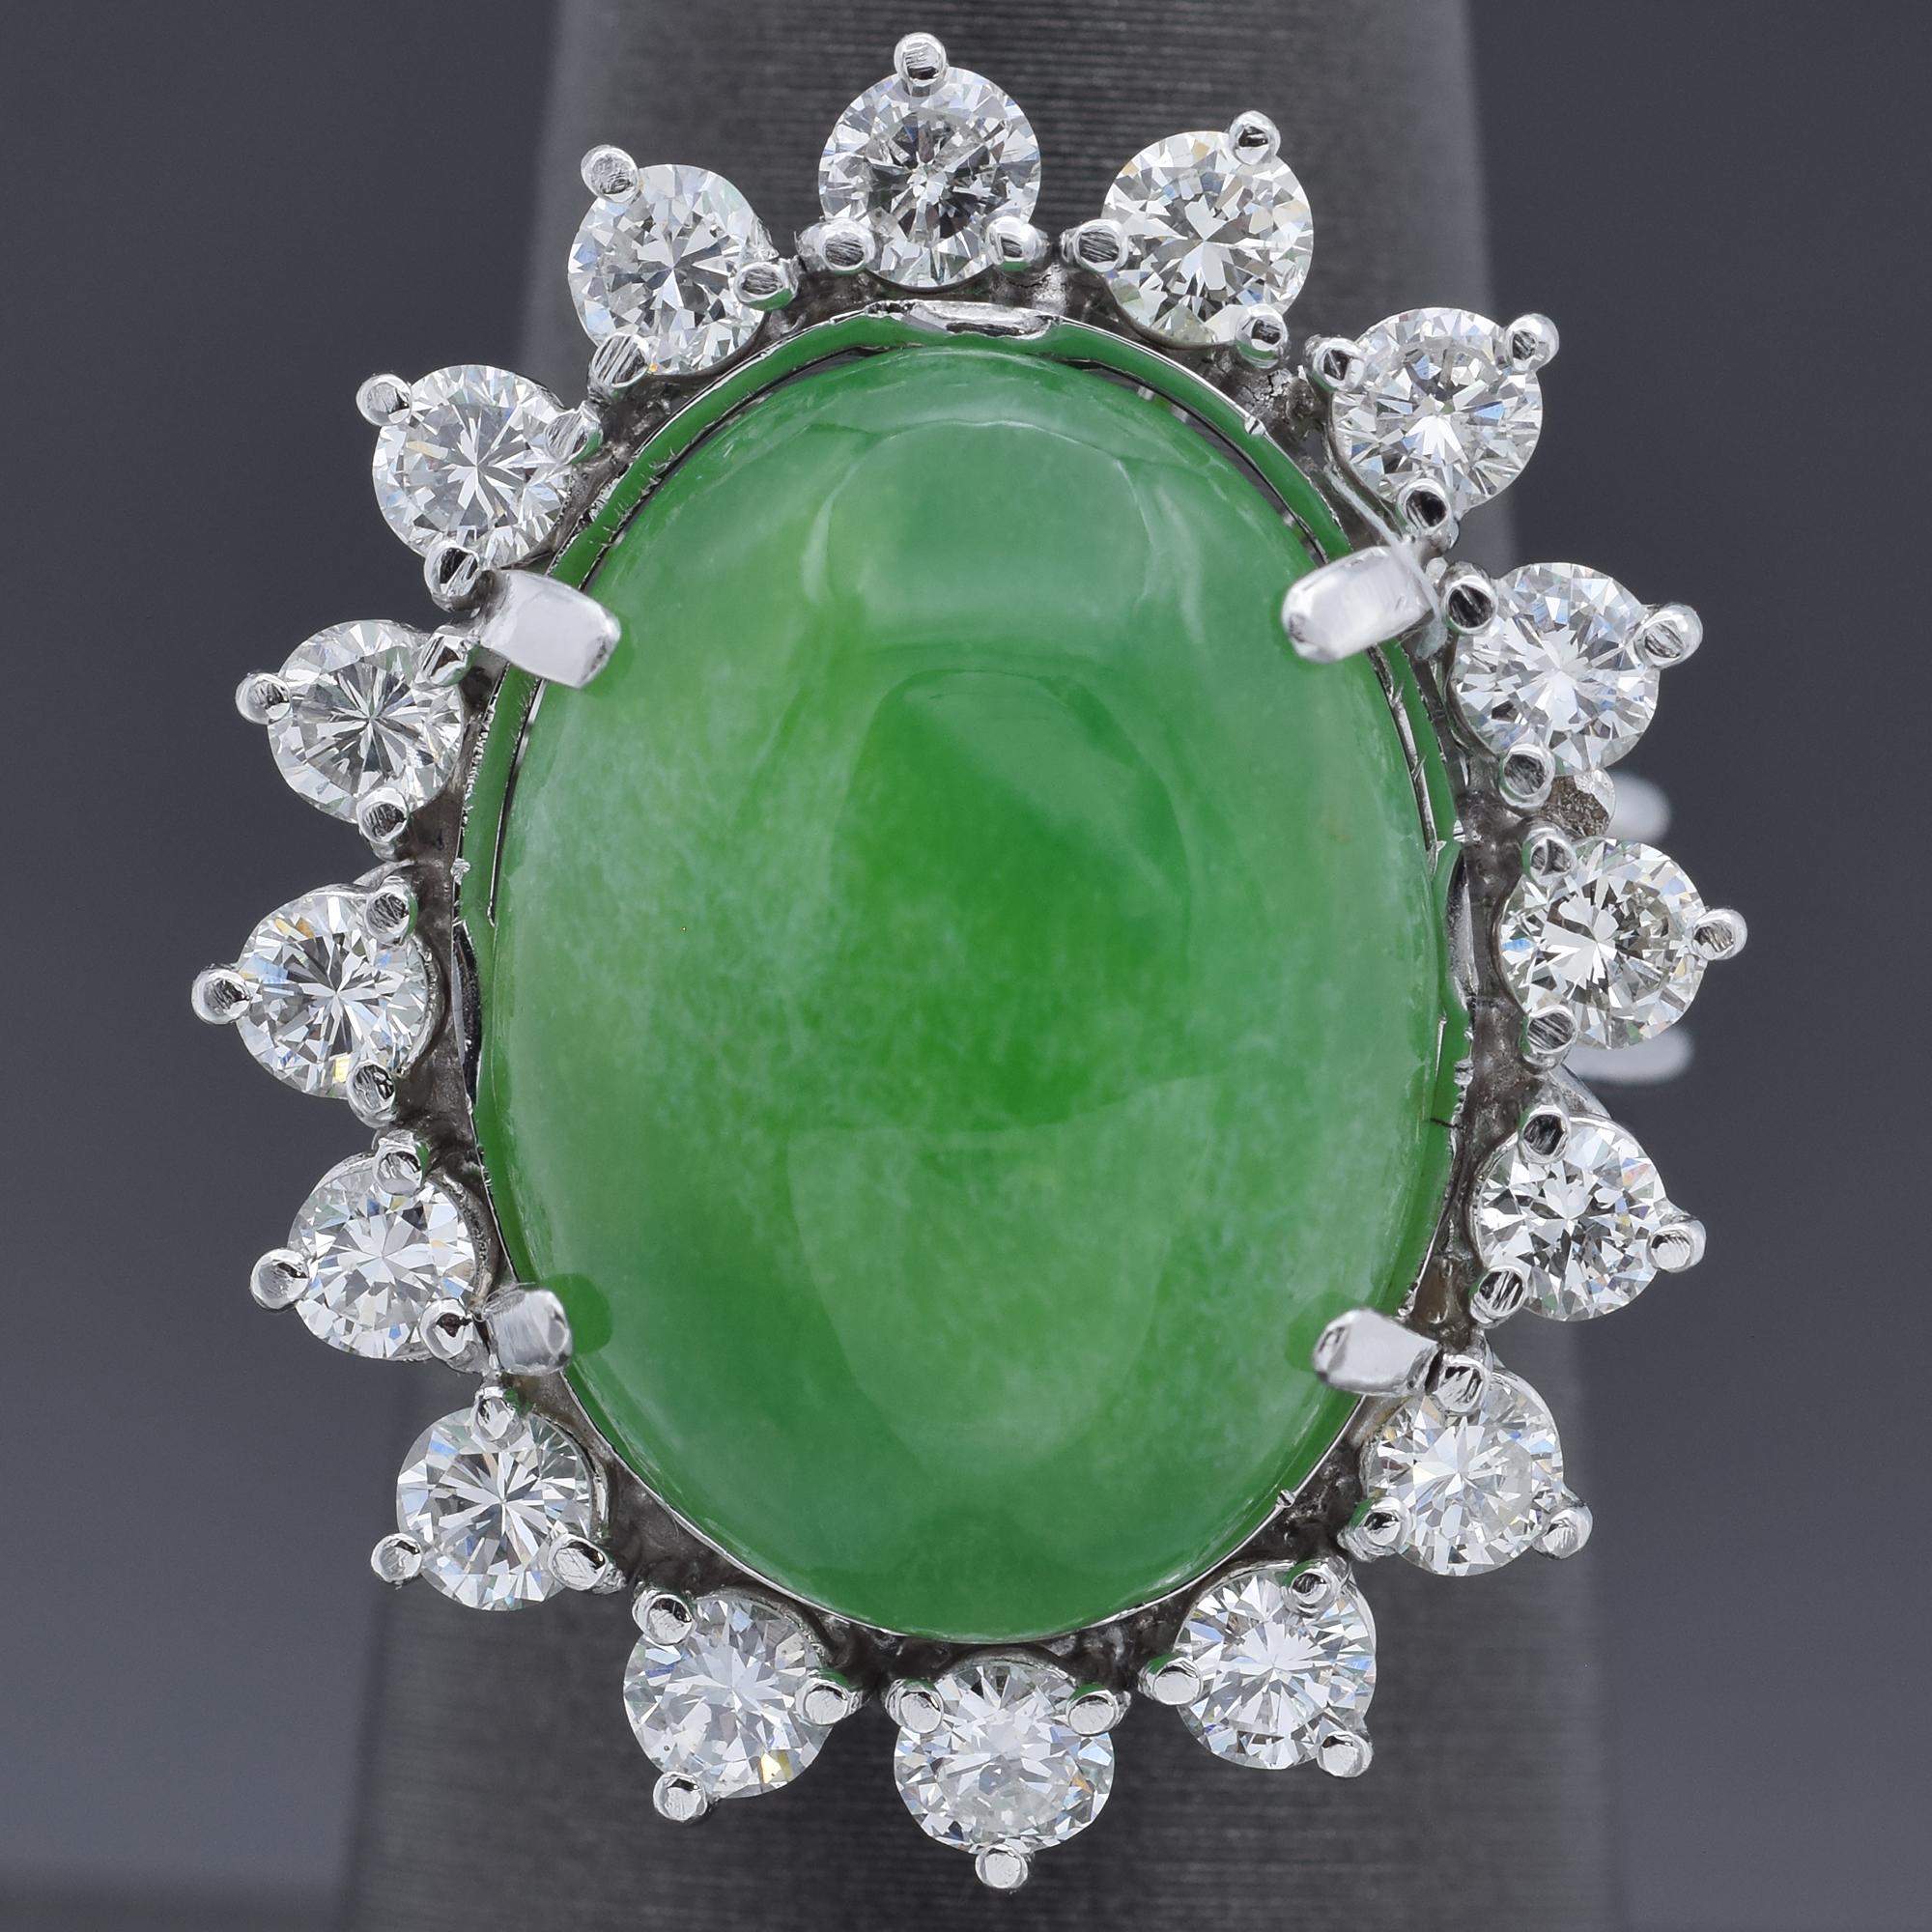 Weight: 14.2 Grams
Stone: 11.75 Ct (18x13x6.2 mm) Green Jade & Approx 1.67 TCW (0.10-0.11 ct) Diamonds
Face of Ring: 26.4 x 21.8 x 12.8 mm
Size: 6
Hallmark: Palladium & 83% Platinum Tested

ITEM #:BR-1069-101123-13